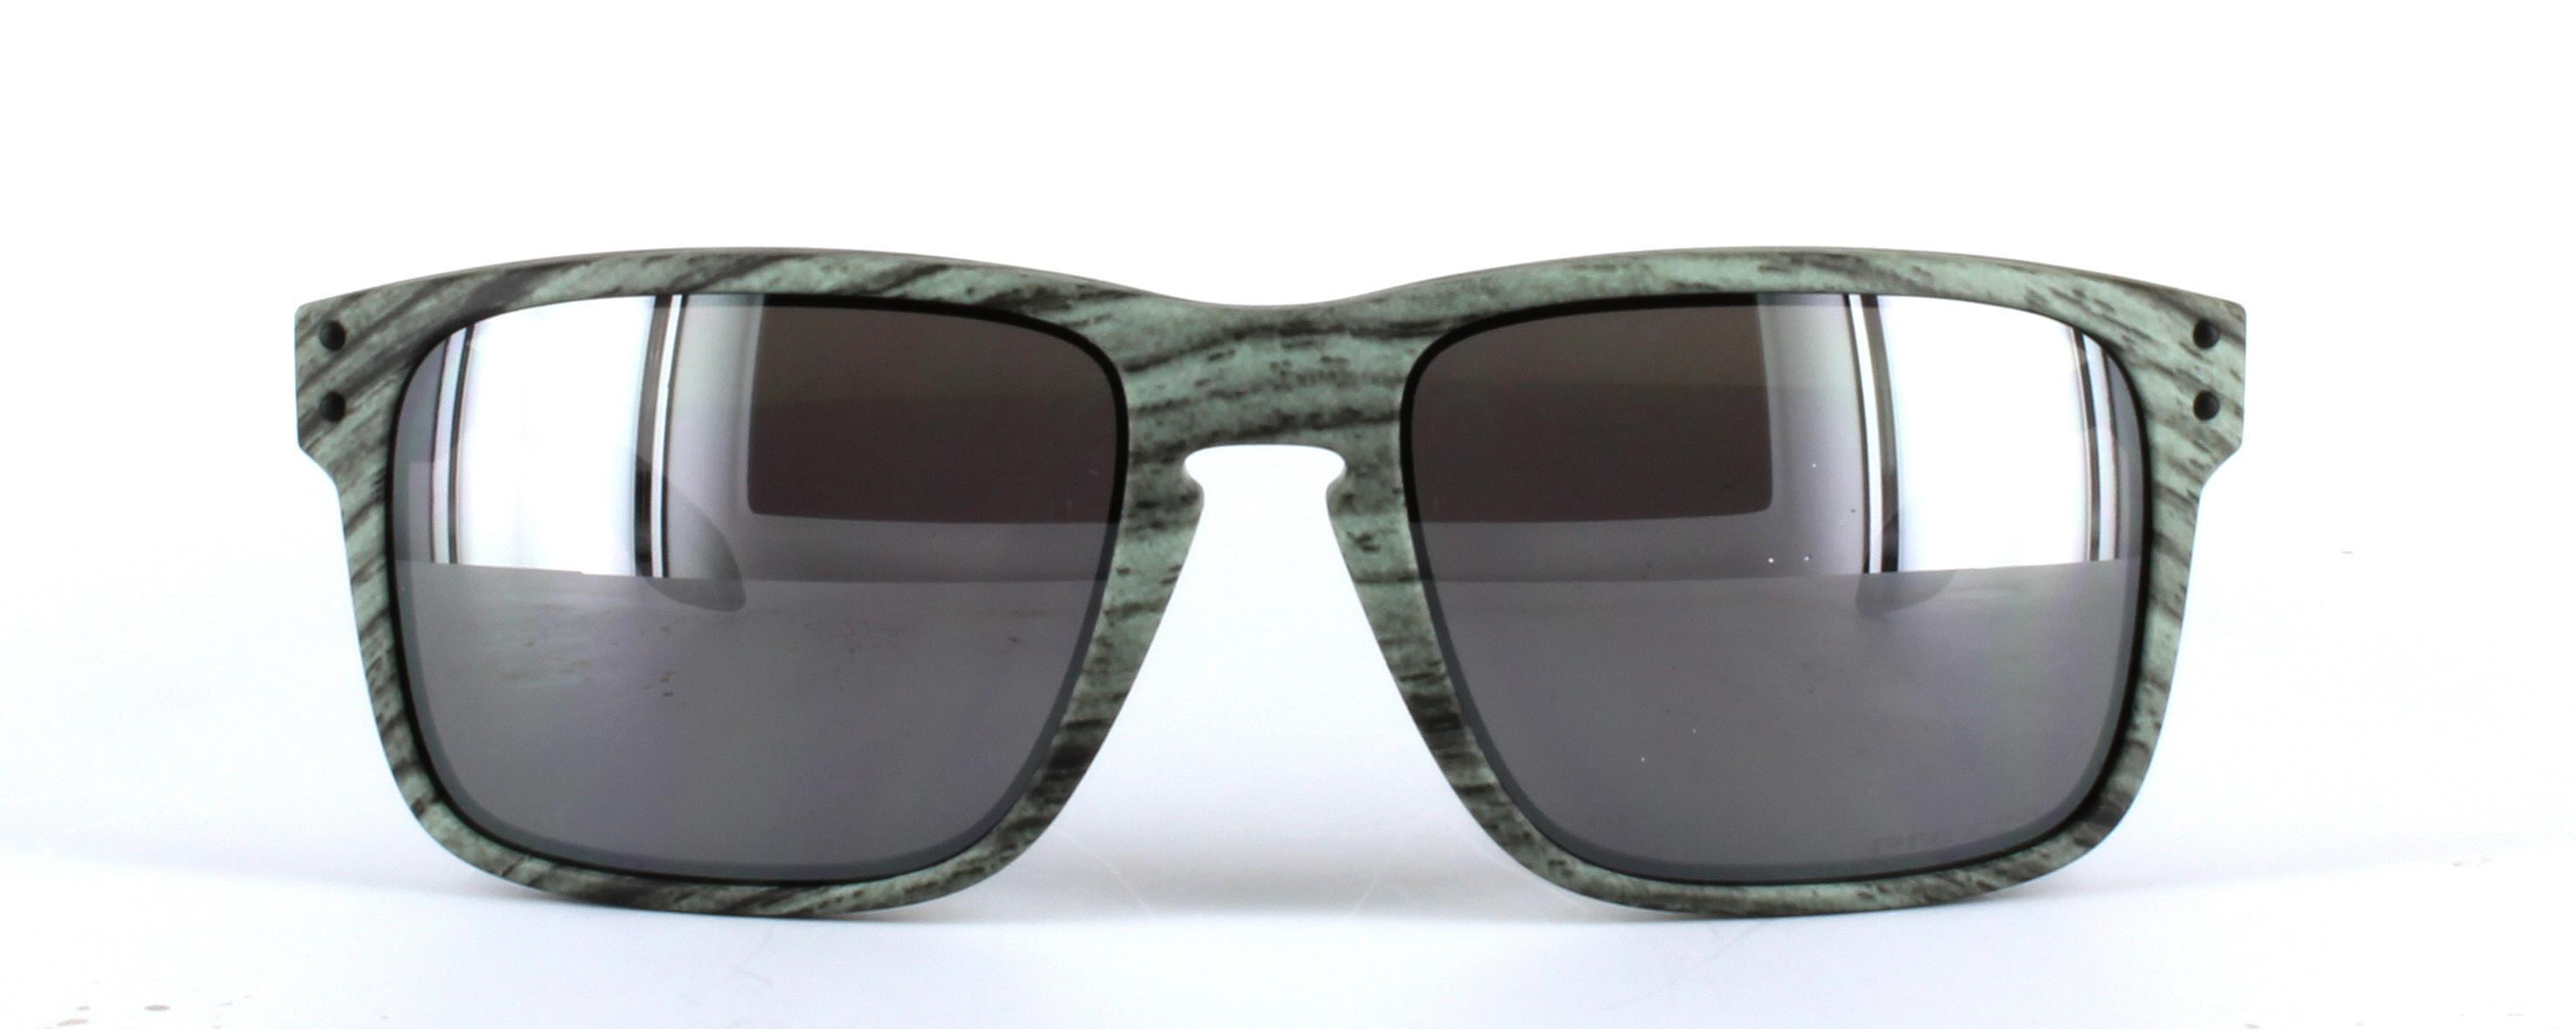 Oakley Ivywood Grey Full Rim Plastic Prescription Sunglasses - Image View 5